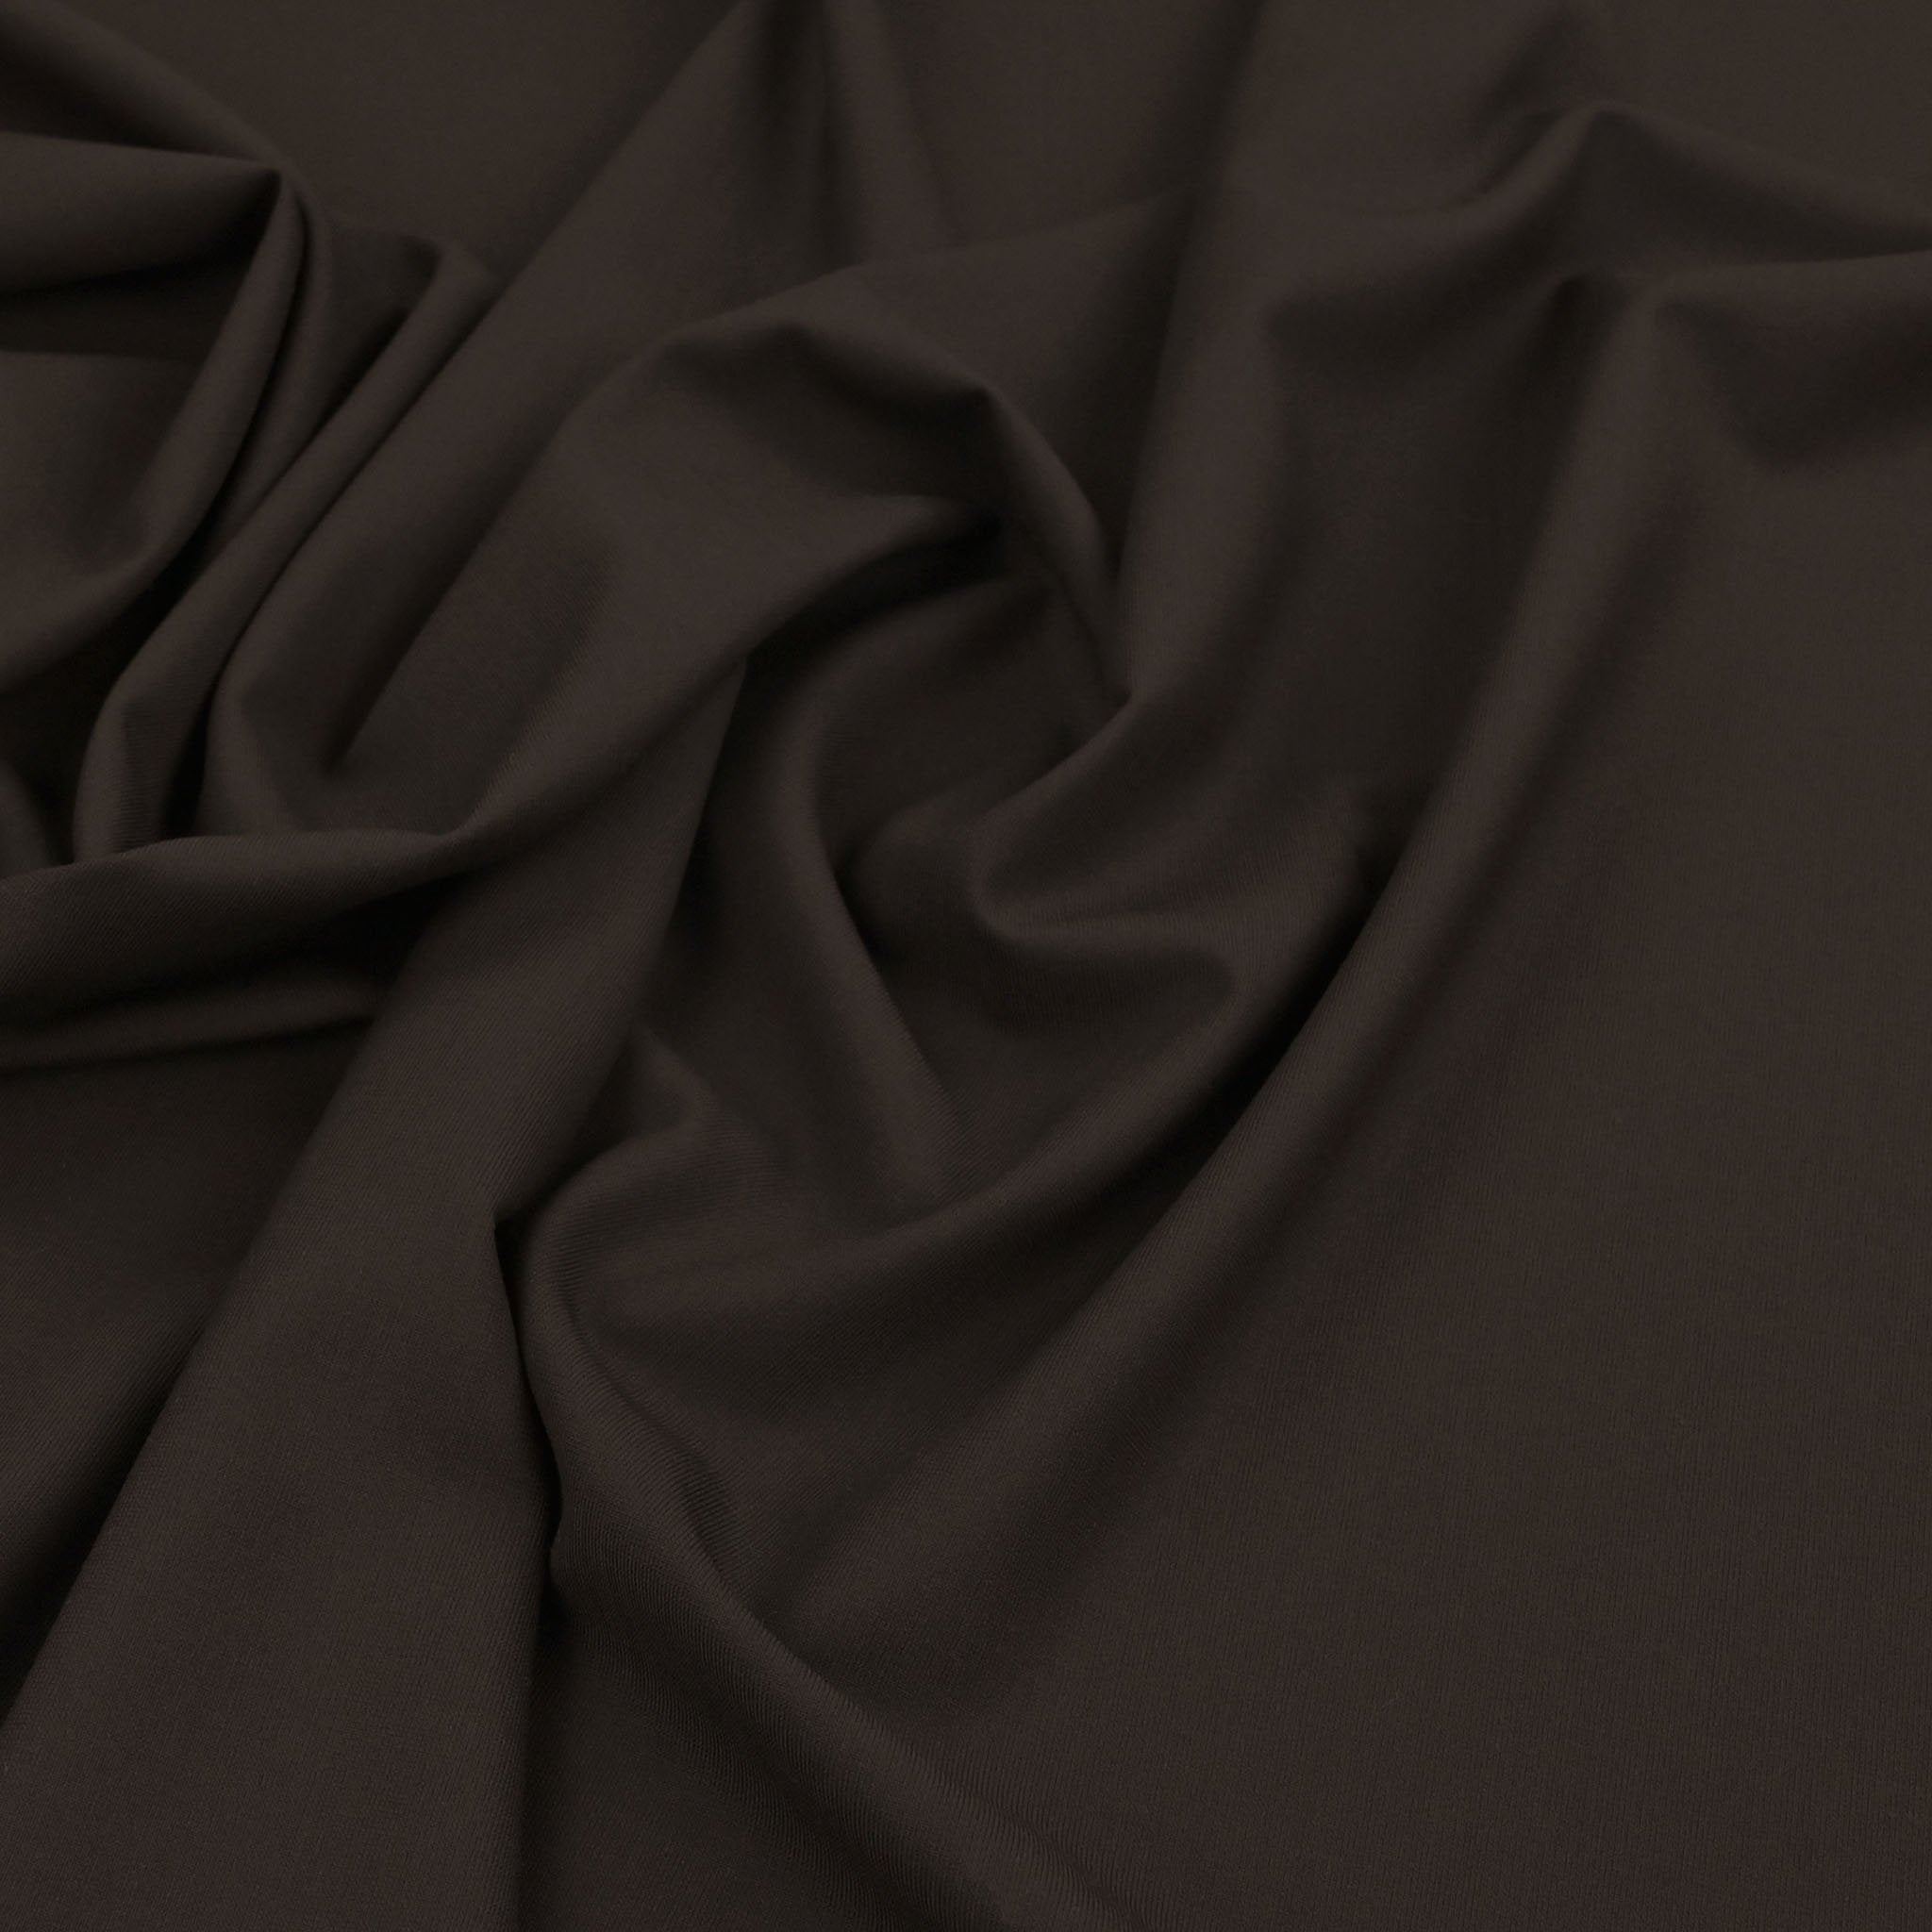 Dark Brown Suiting Fabric 98179